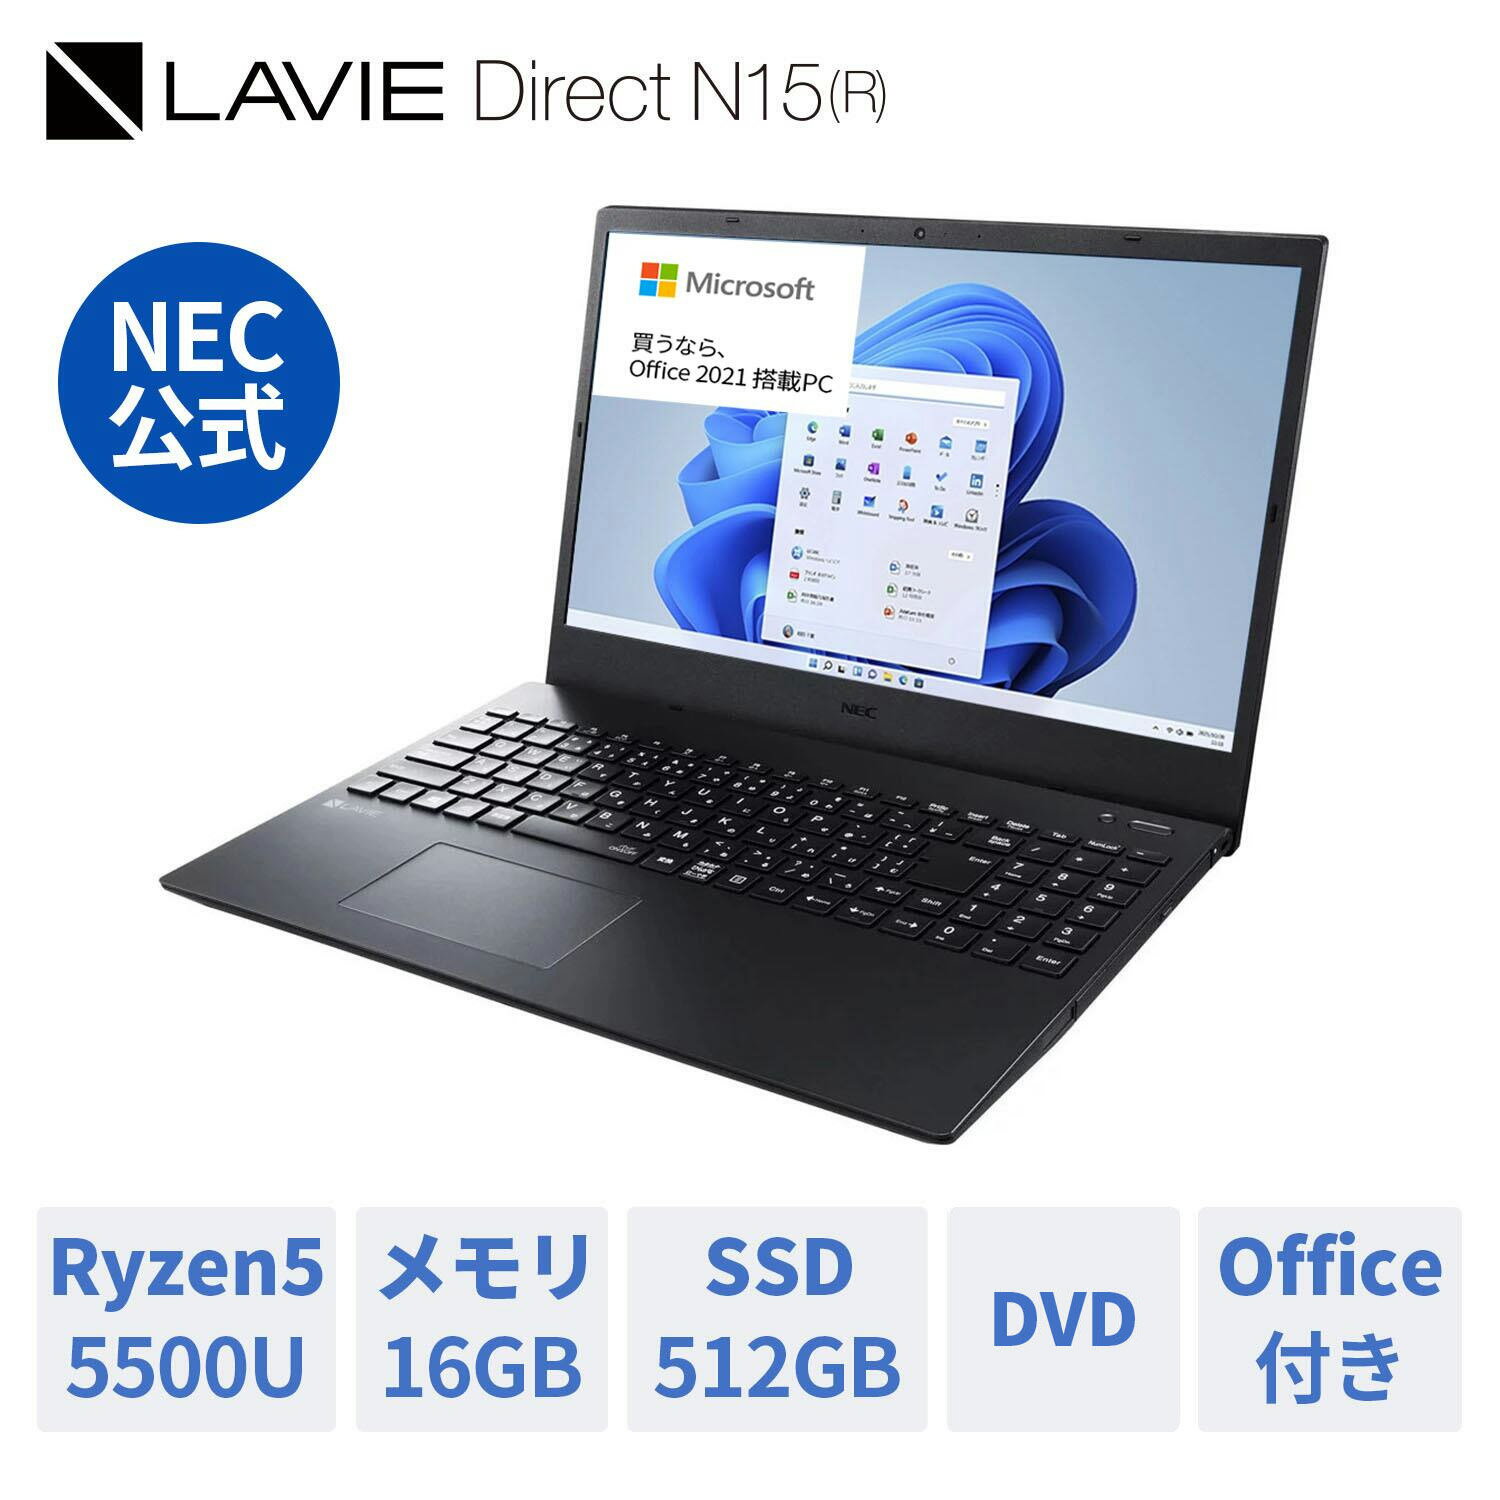 【Norton1】【DEAL10%】【公式】 新品 NEC ノートパソコン office付き LAVIE Direct N15 (R) 15.6インチ Windows 11 Home AMD Ryzen 5-5500U メモリ 16GB 512GB SSD DVD 1年保証 送料無料 人気商品 yxe